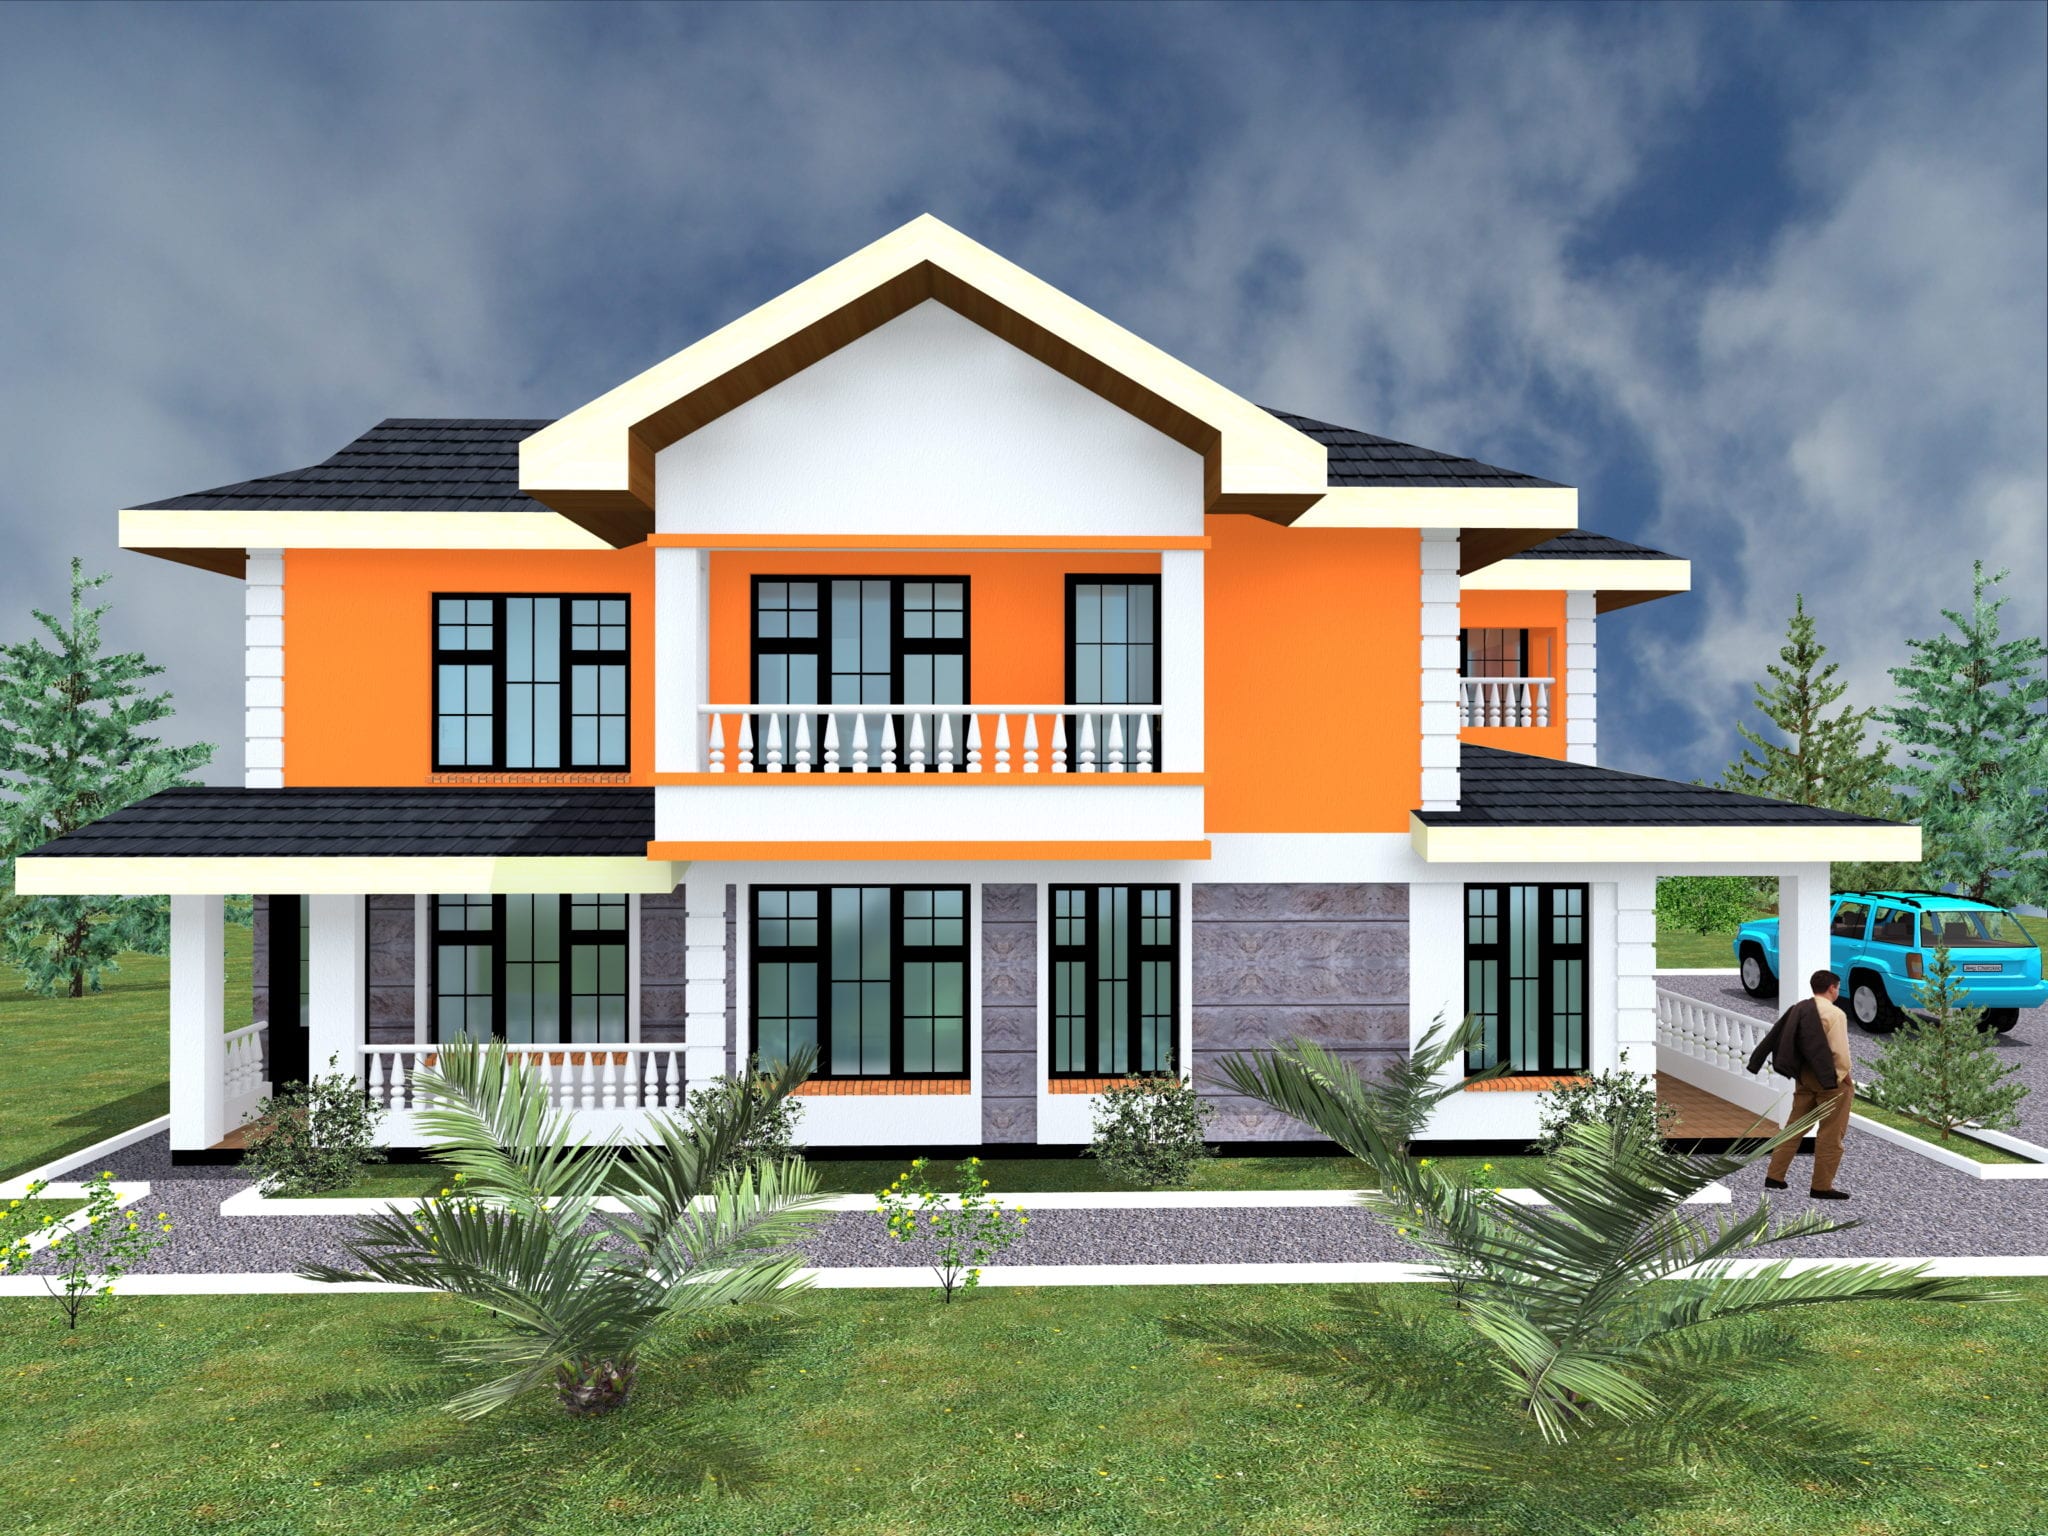 View 4 Bedroom House Plan In Kenya Background – Interior Home Design